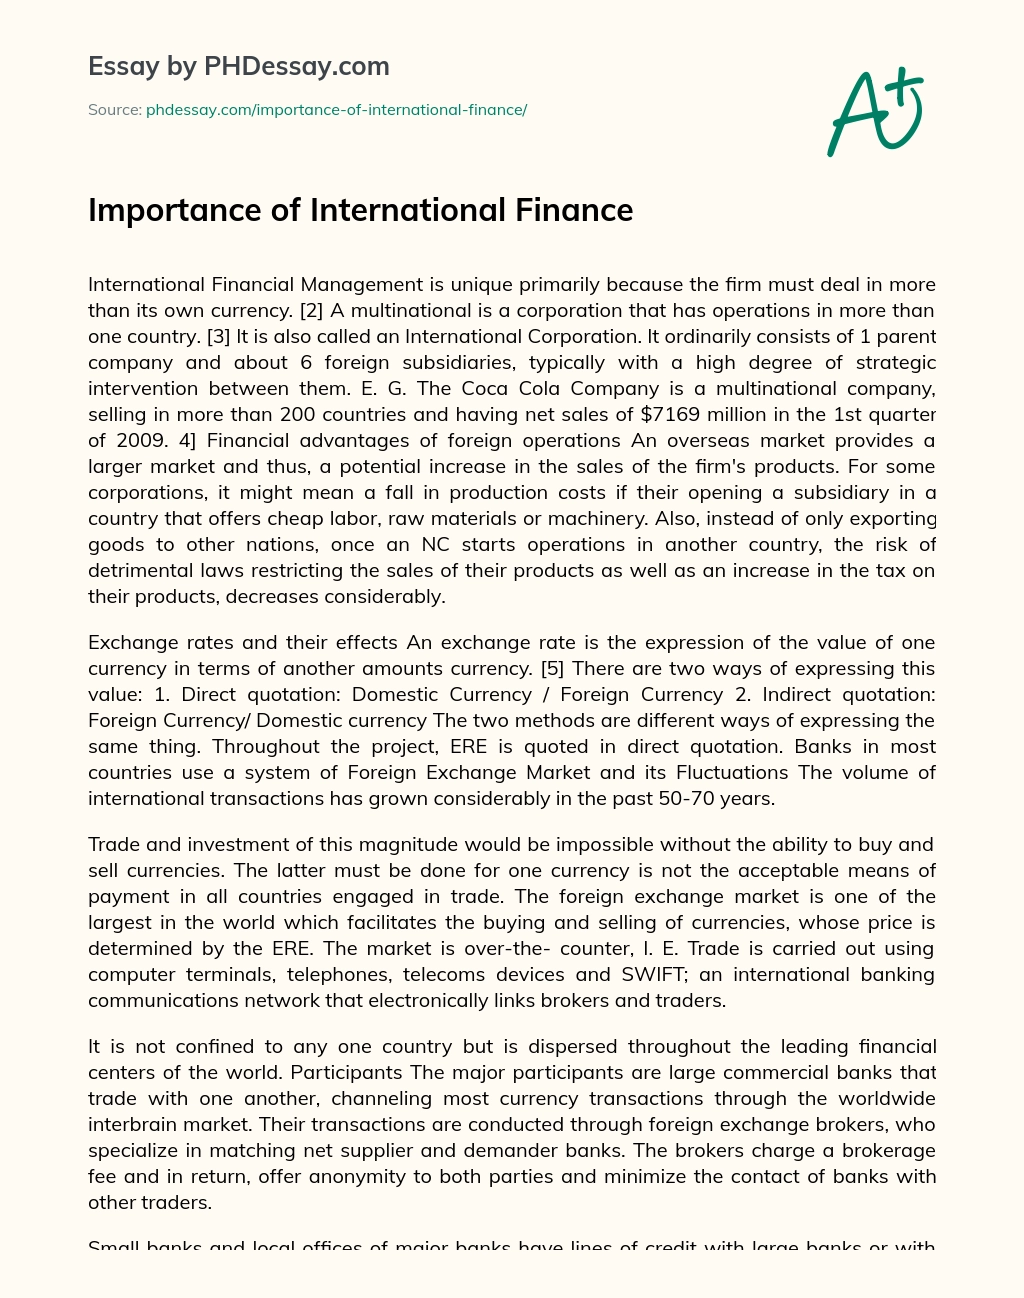 Importance of International Finance essay